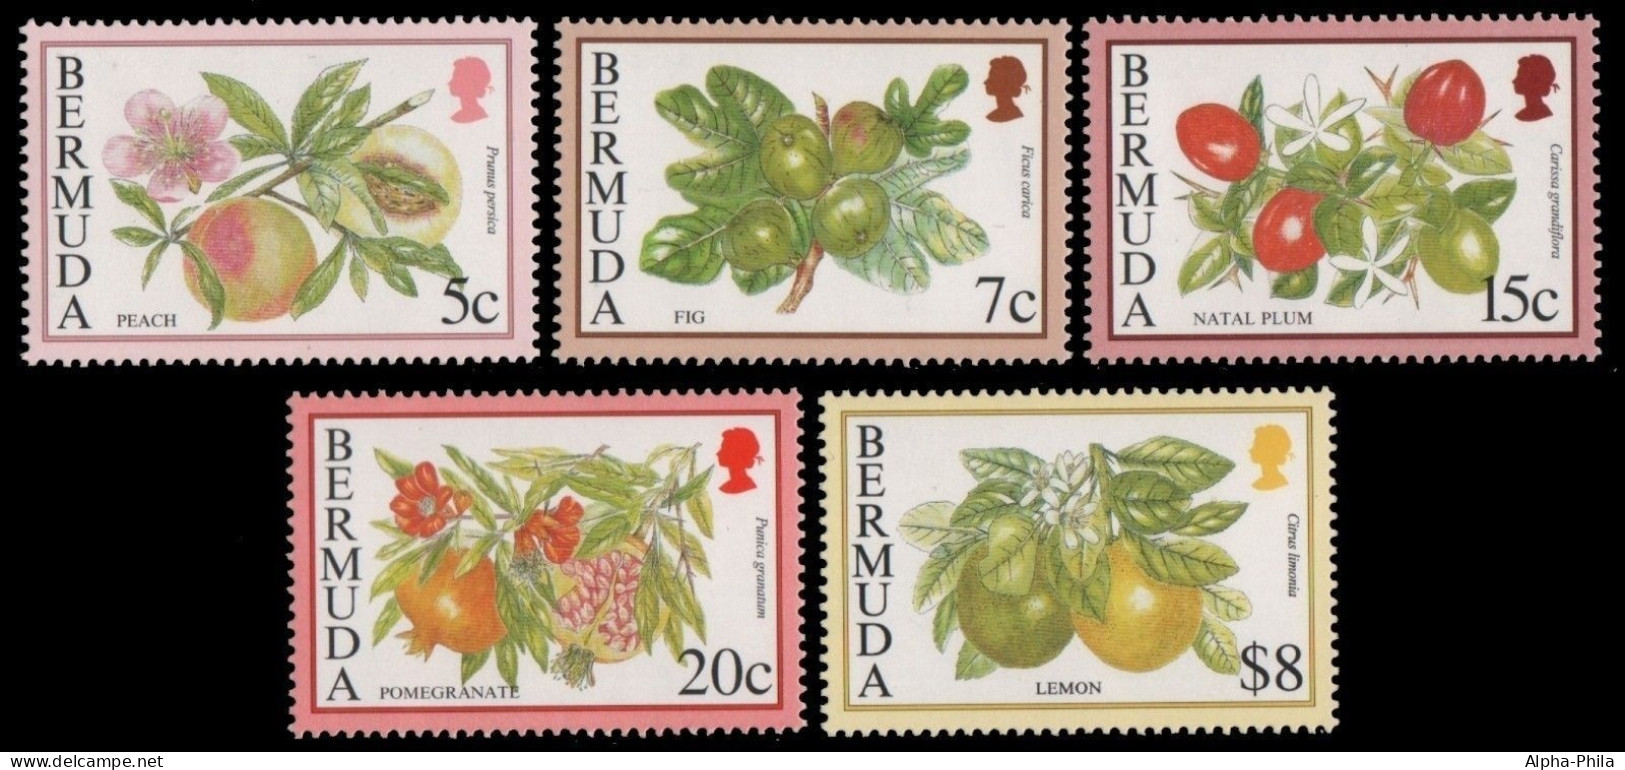 Bermuda 1994 - Mi-Nr. 650-654 I ** - MNH - Früchte / Fruits - Bermuda